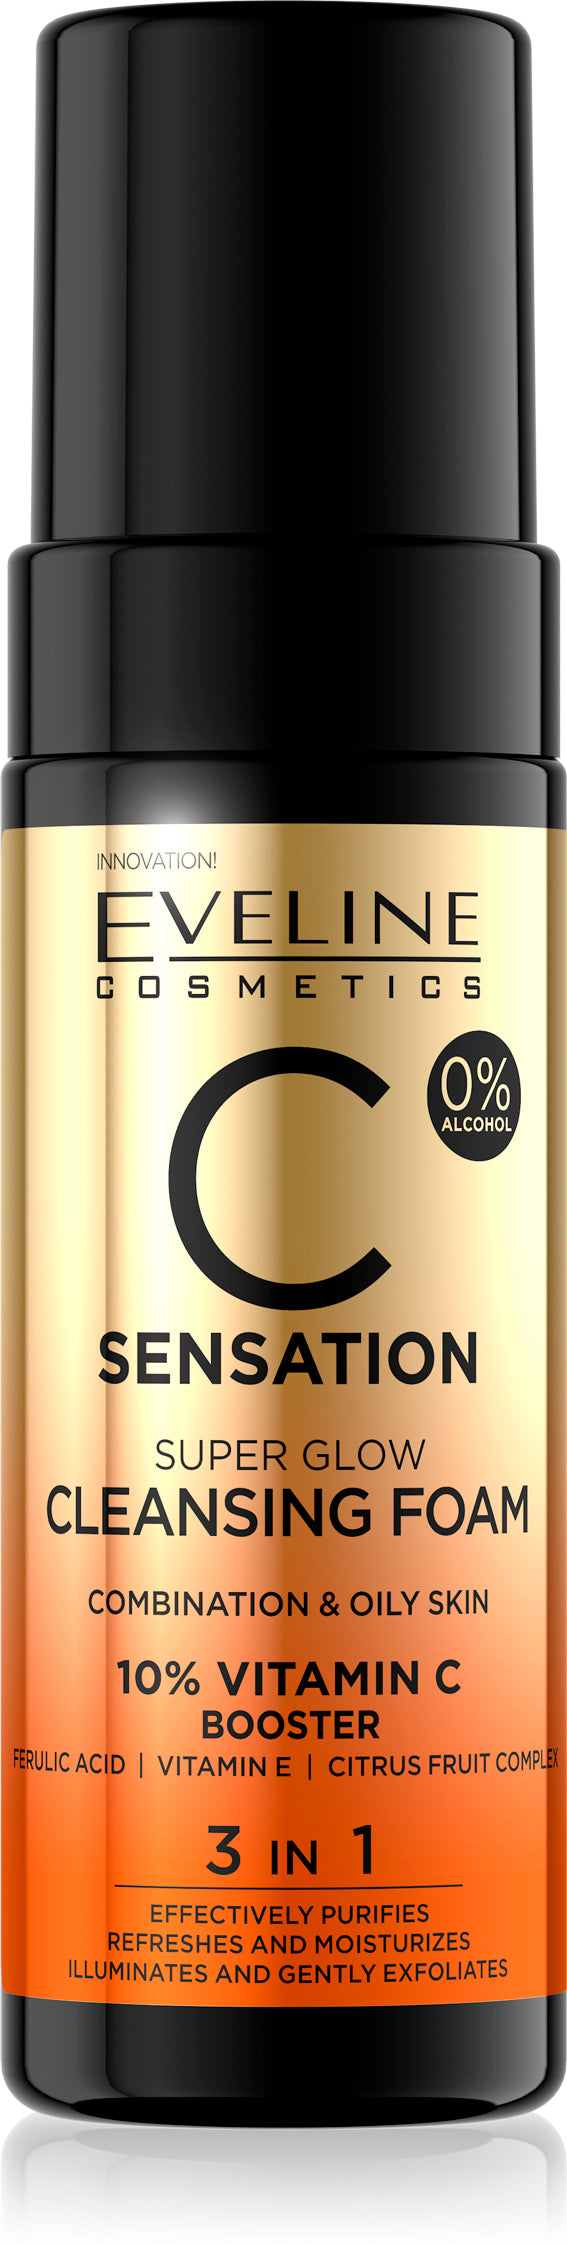 Eveline C Sensation 10% vitC cleansing foam 150ml